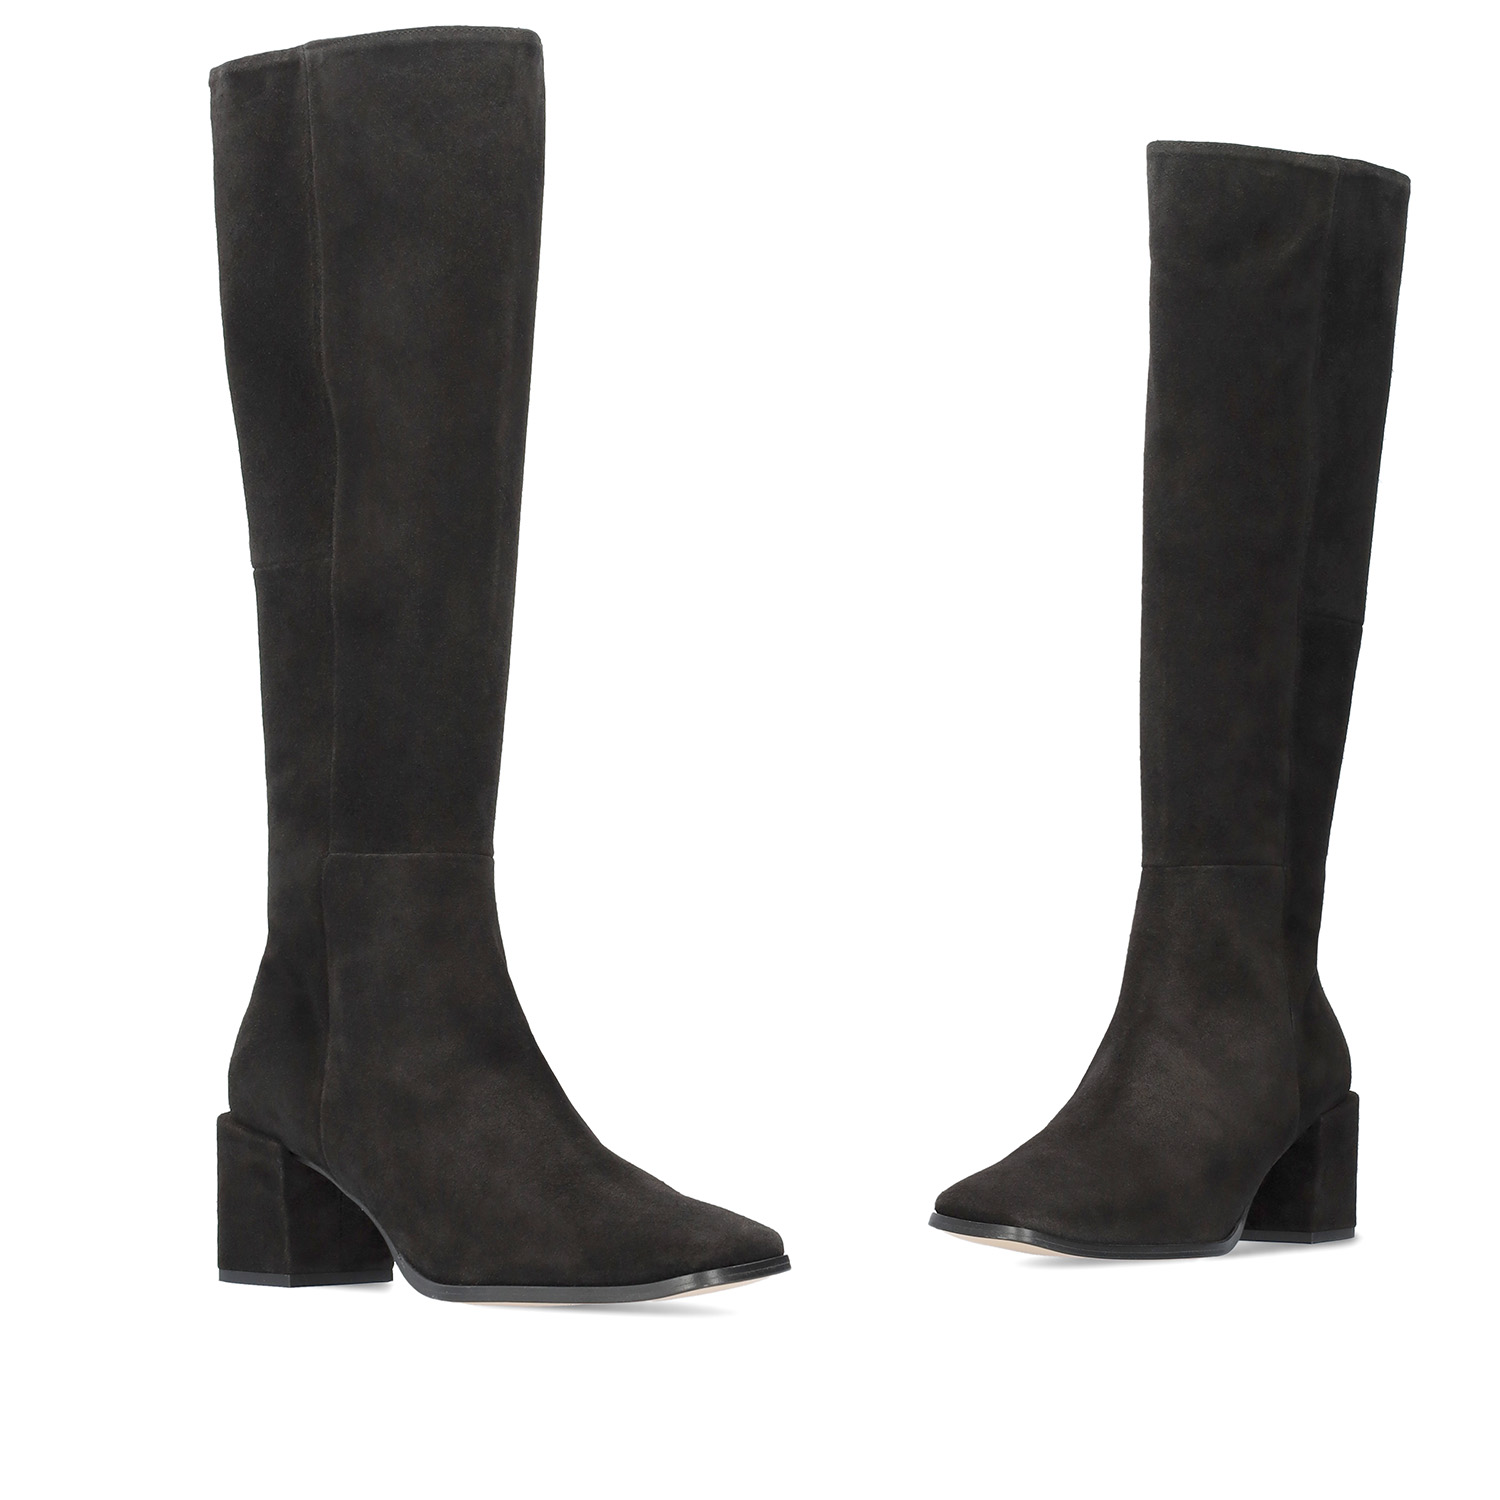 Knee-high black split leather boots 